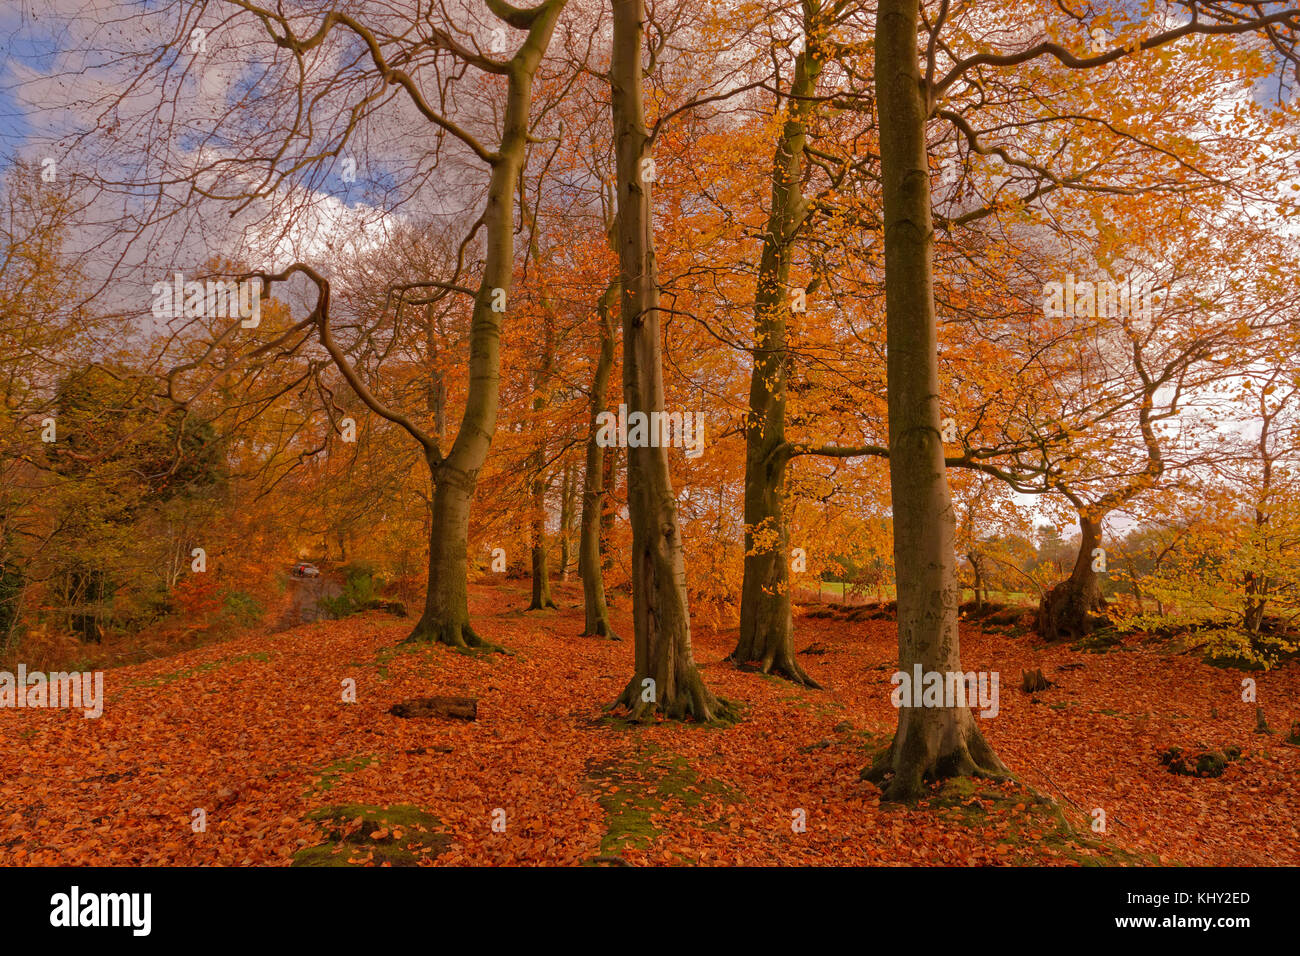 Autumn at Alderley Edge Woods in Cheshire, England. UK. Stock Photo